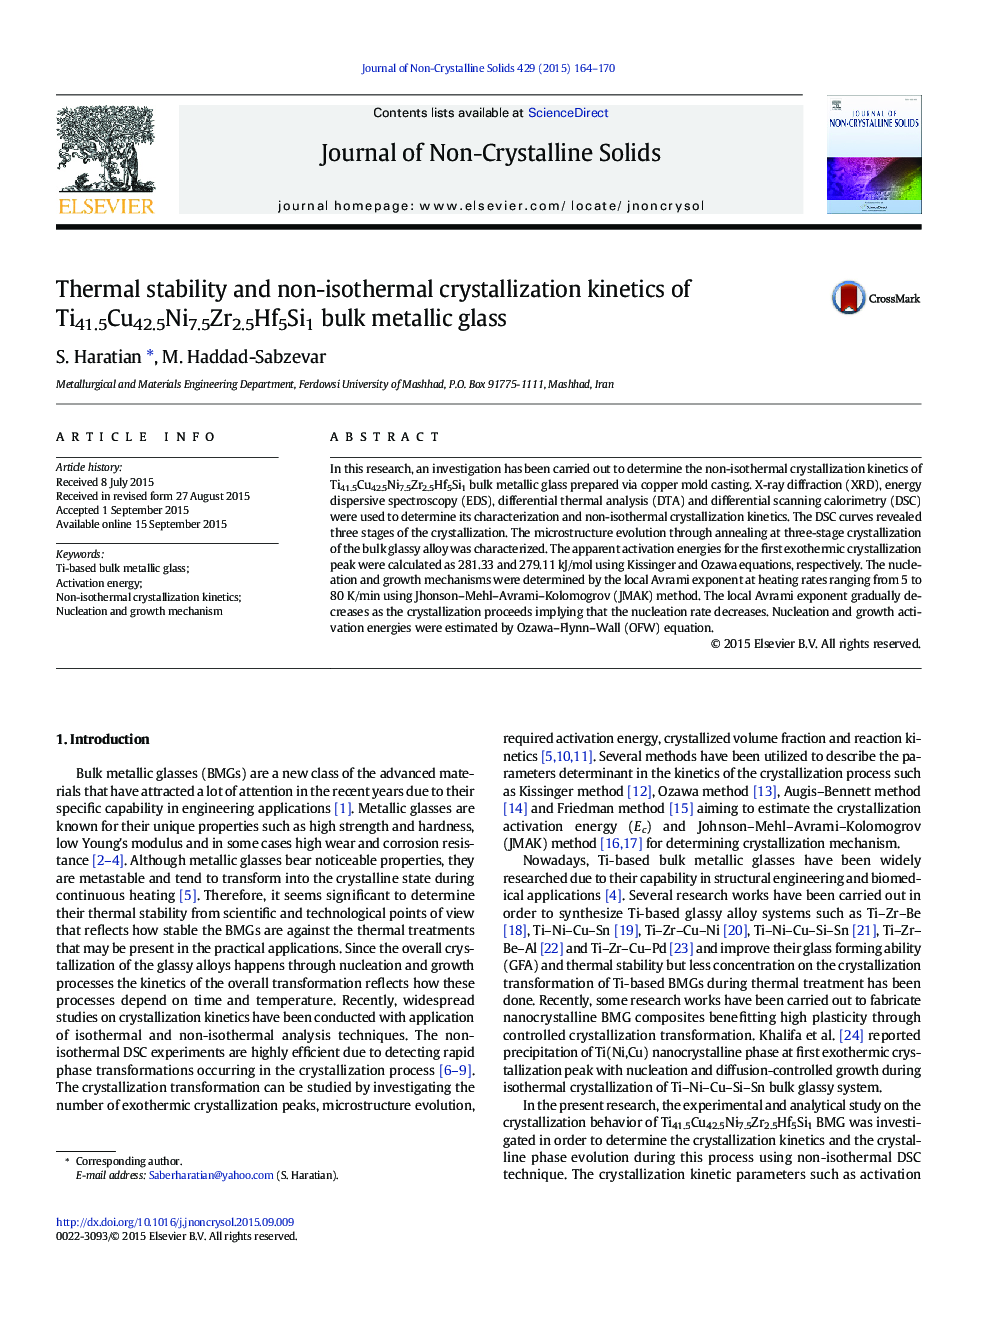 Thermal stability and non-isothermal crystallization kinetics of Ti41.5Cu42.5Ni7.5Zr2.5Hf5Si1 bulk metallic glass